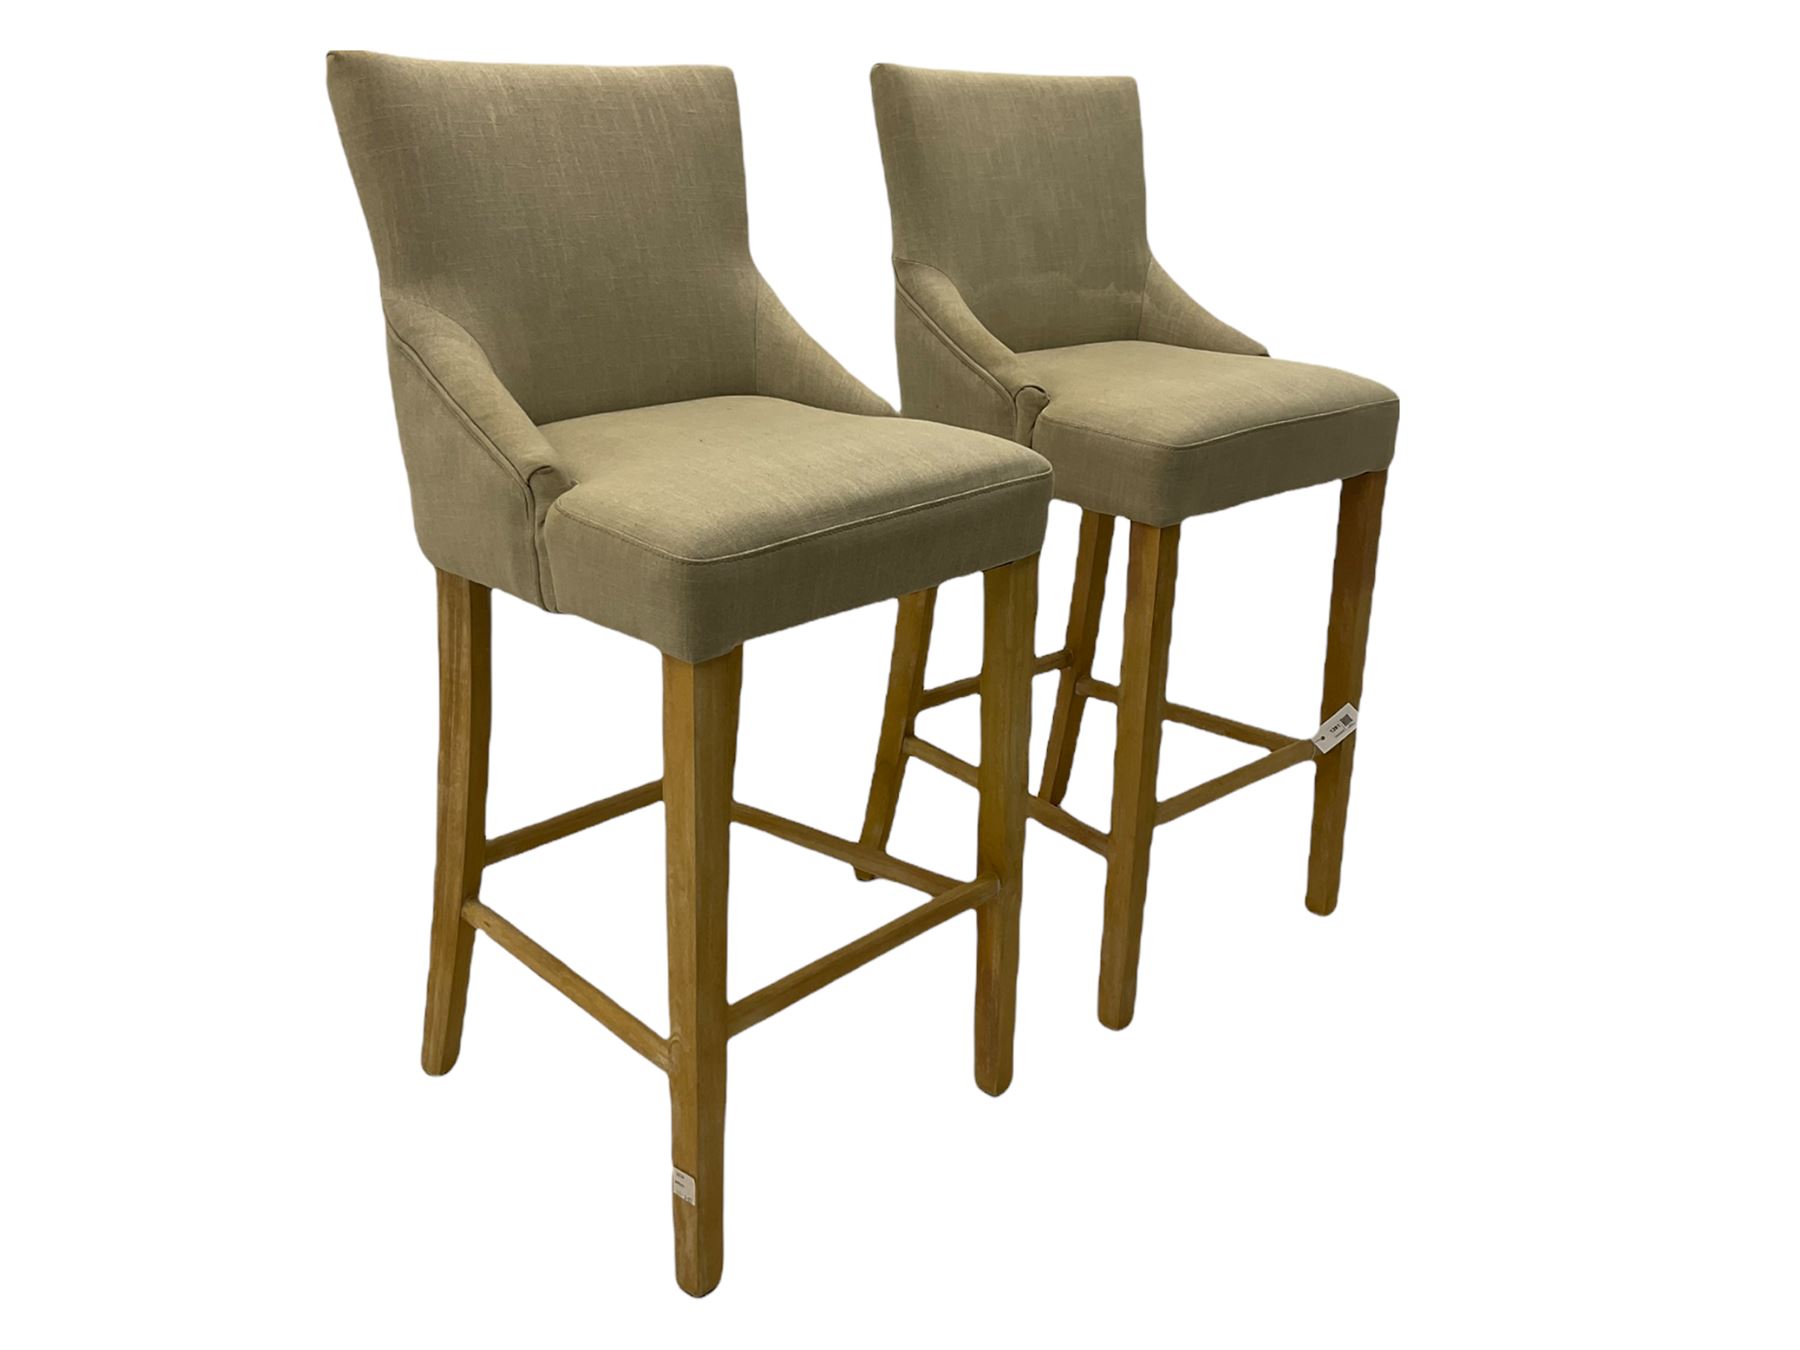 Pair of light oak bar stools - Image 5 of 12